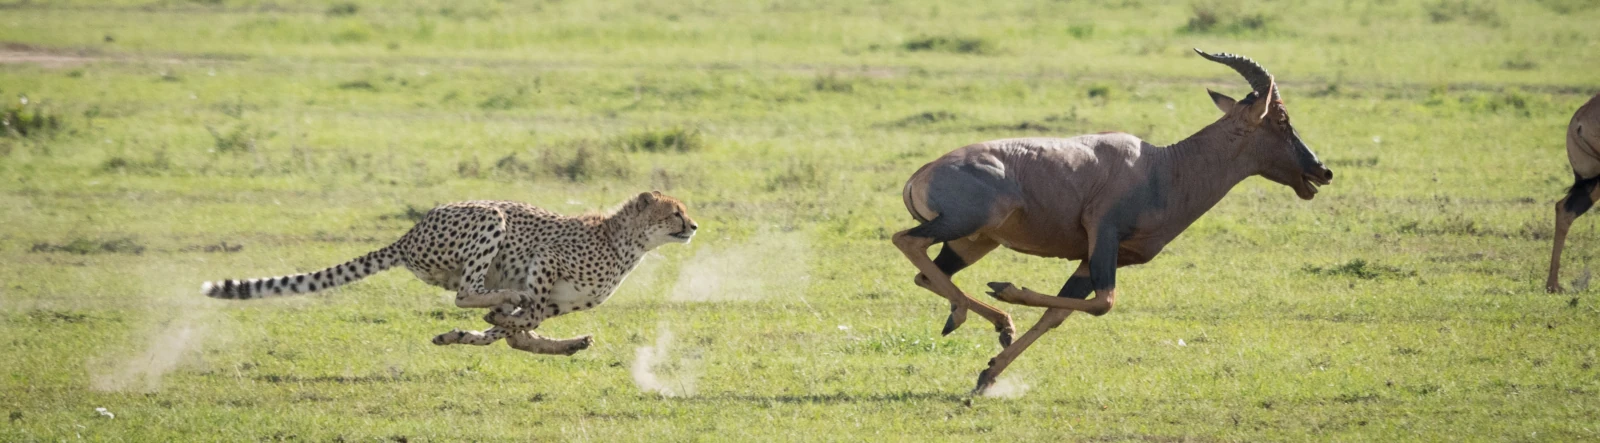 A cheetah chasing prey